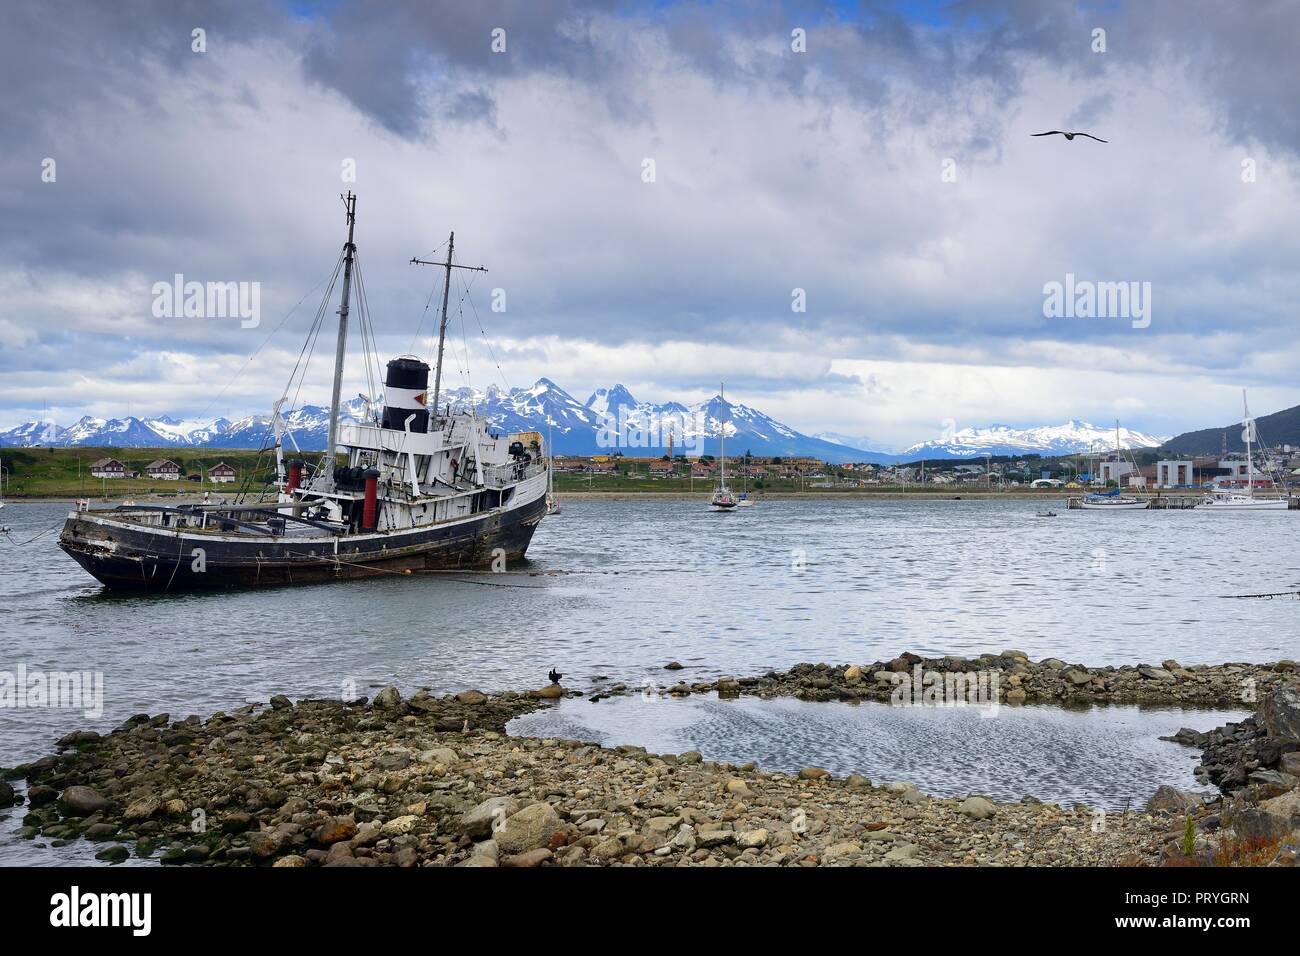 Shipwreck in the Beagle Canal, Ushuaia, Tierra del Fuego Province, Tierra del Fuego, Argentina Stock Photo